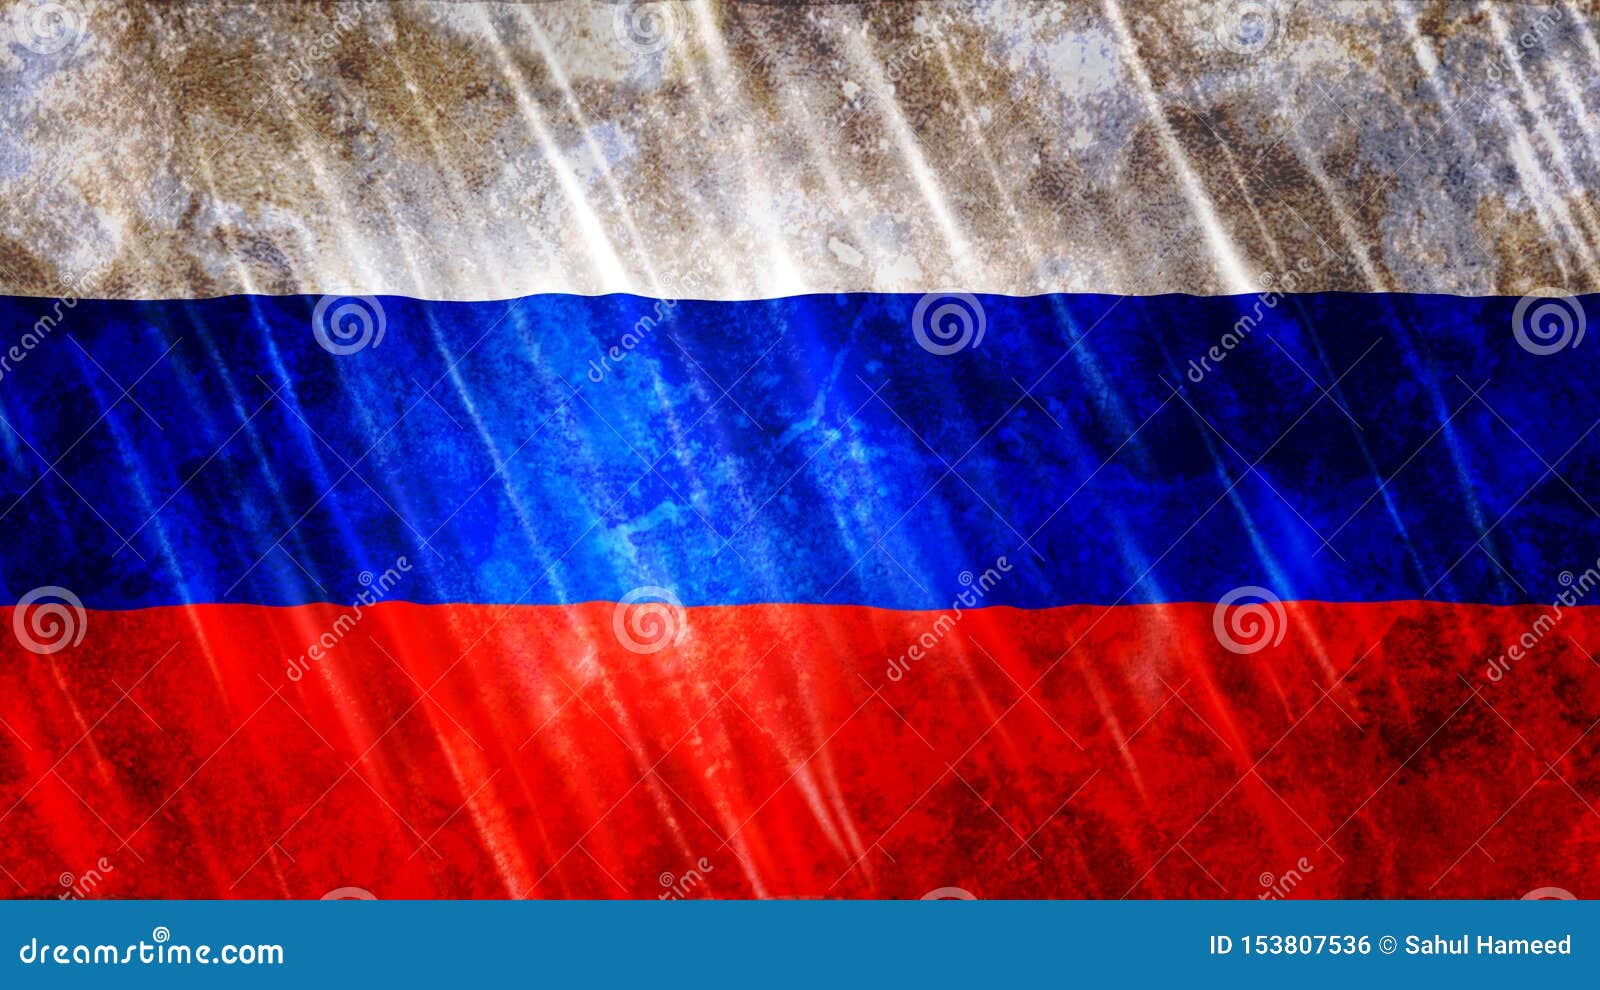 De Vlag Van Rusland Stock Illustratie. Illustration Of Rusland - 153807536